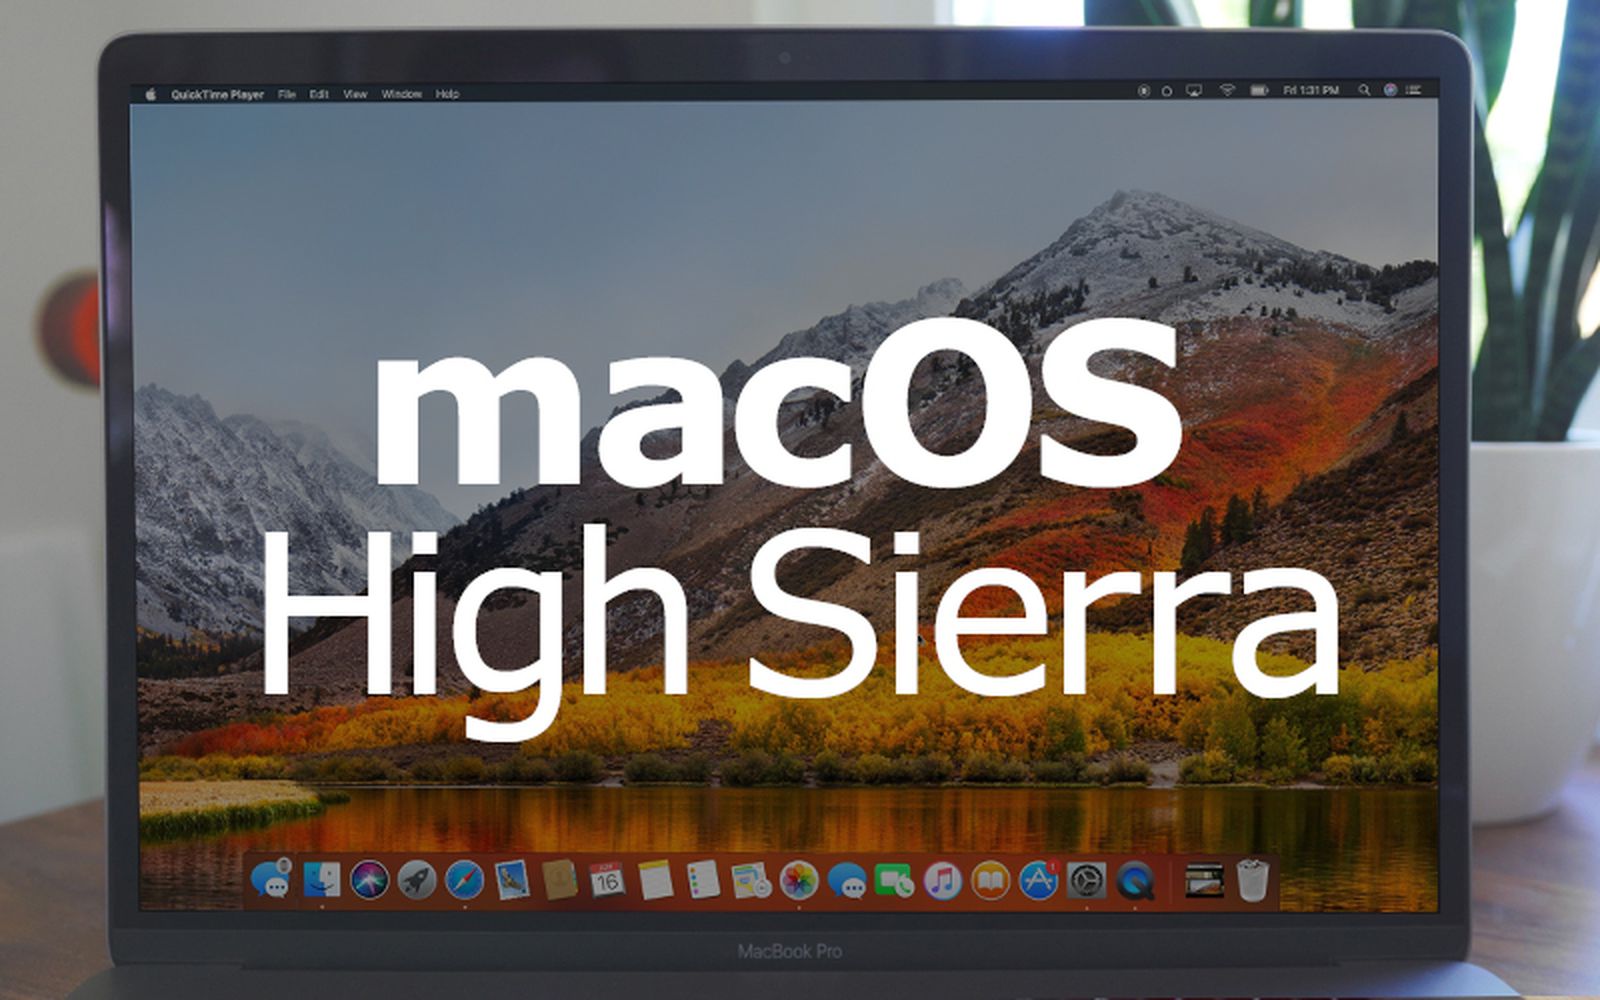 ghost installer for scribus - mac os high sierra